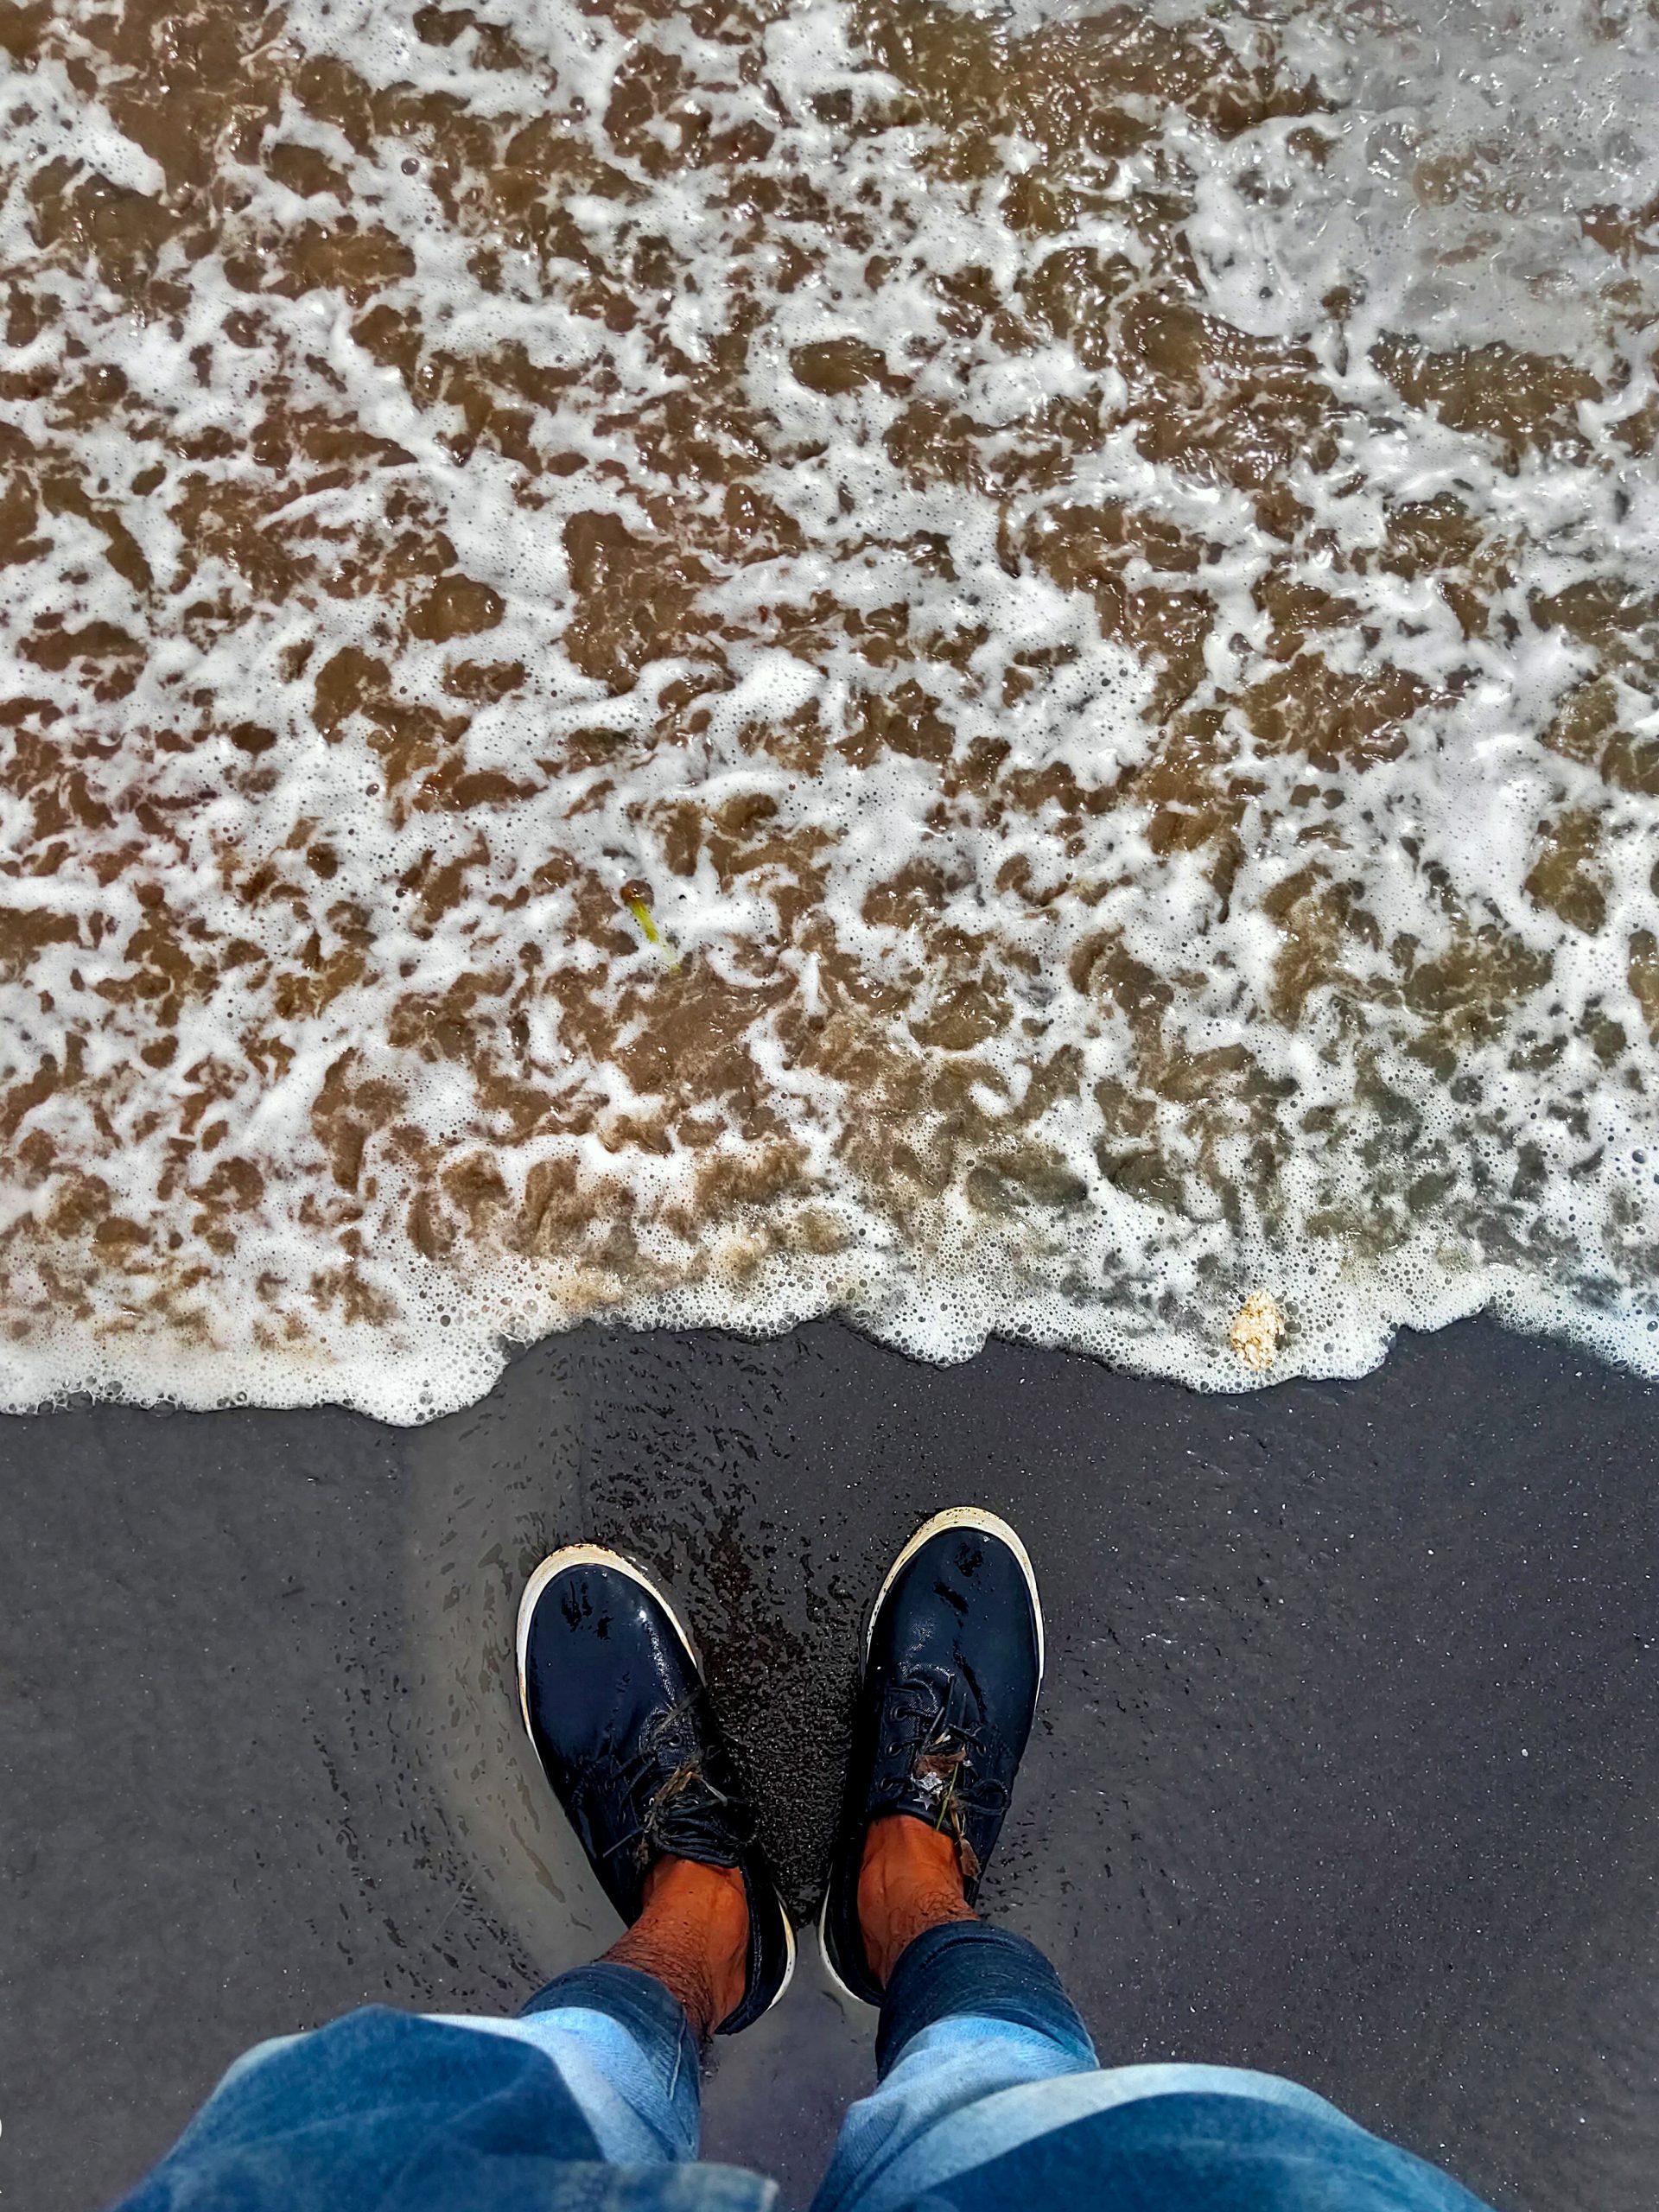 Standing at Beach